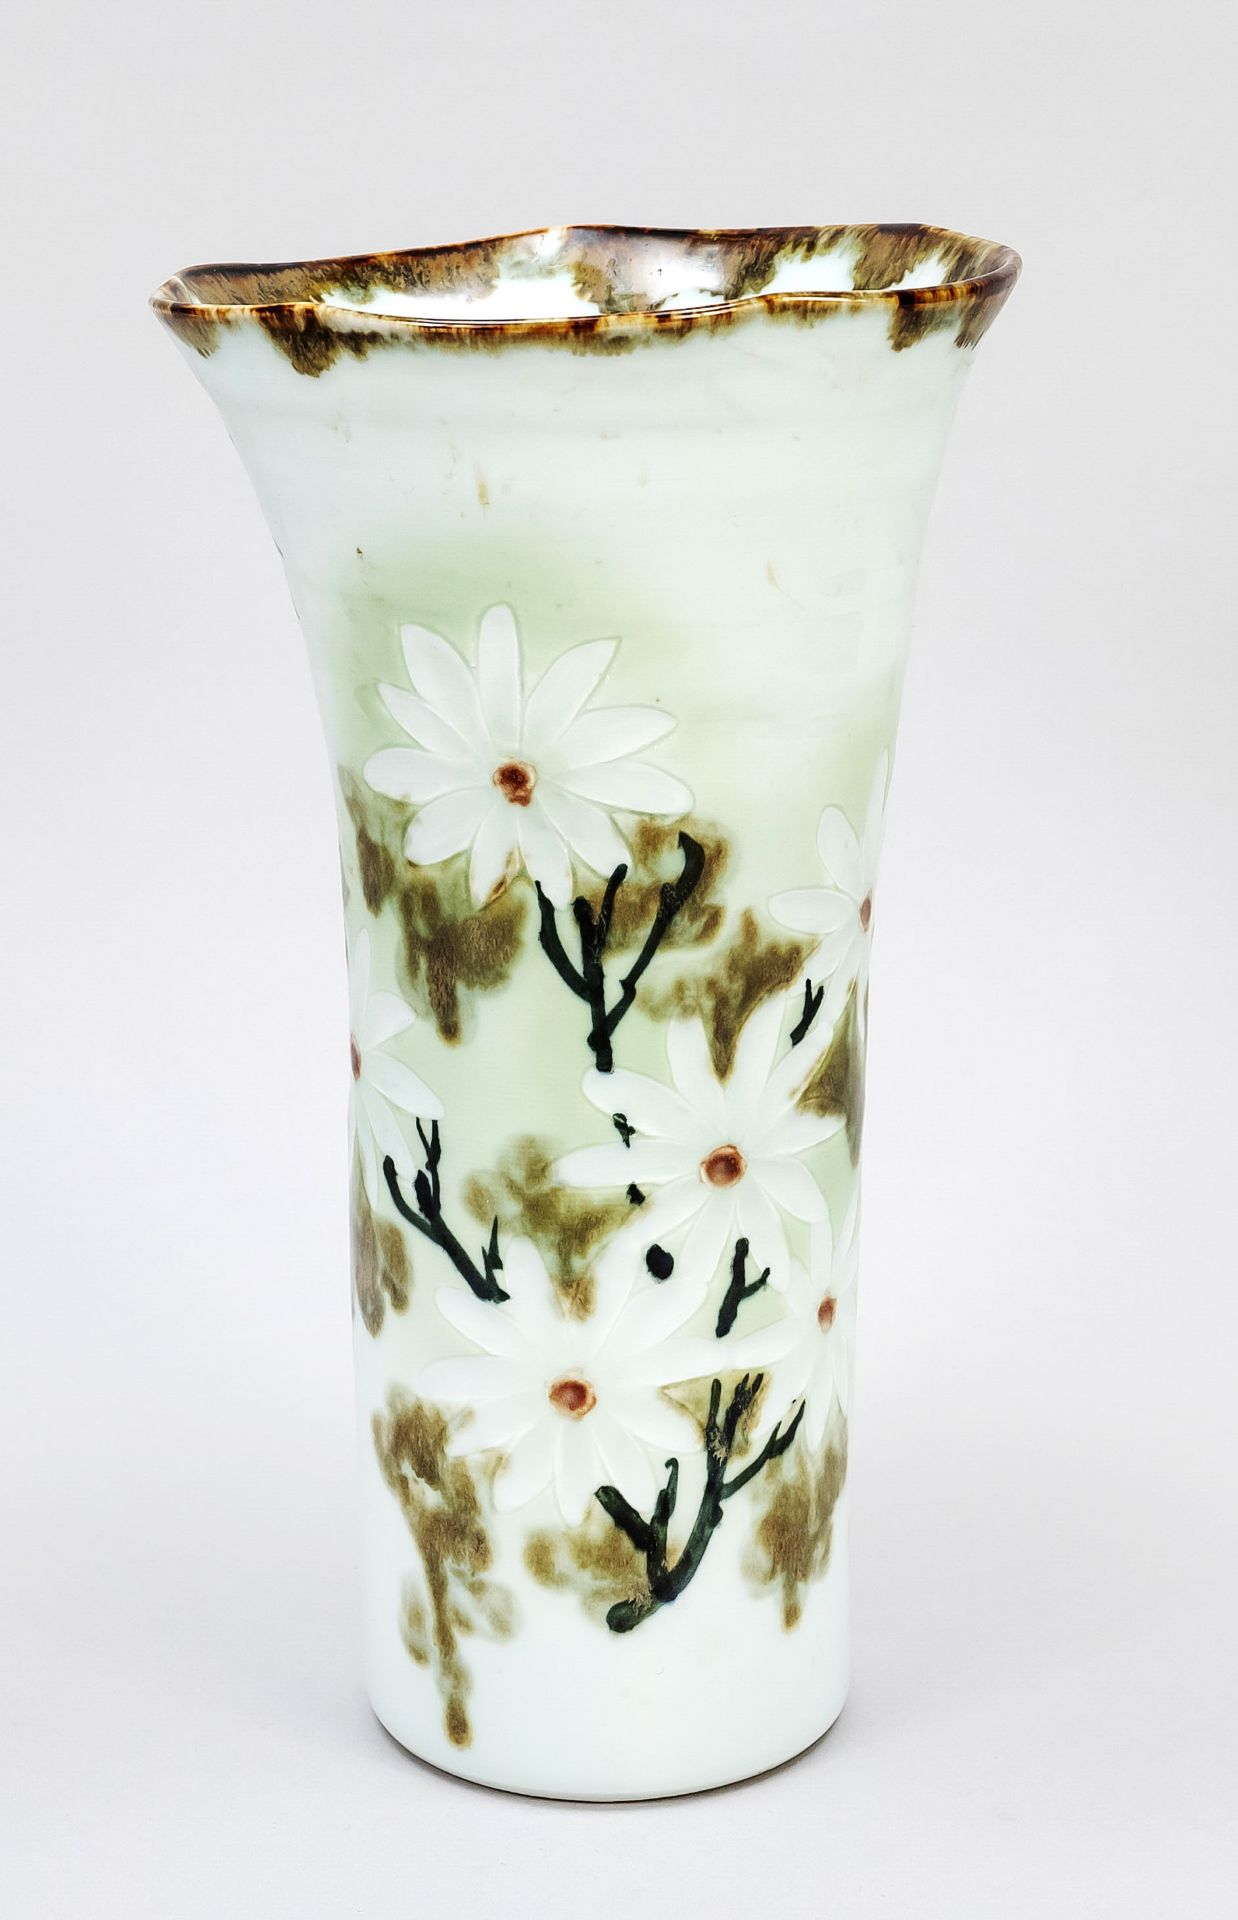 Vasenpokal mit weißen Blümelei